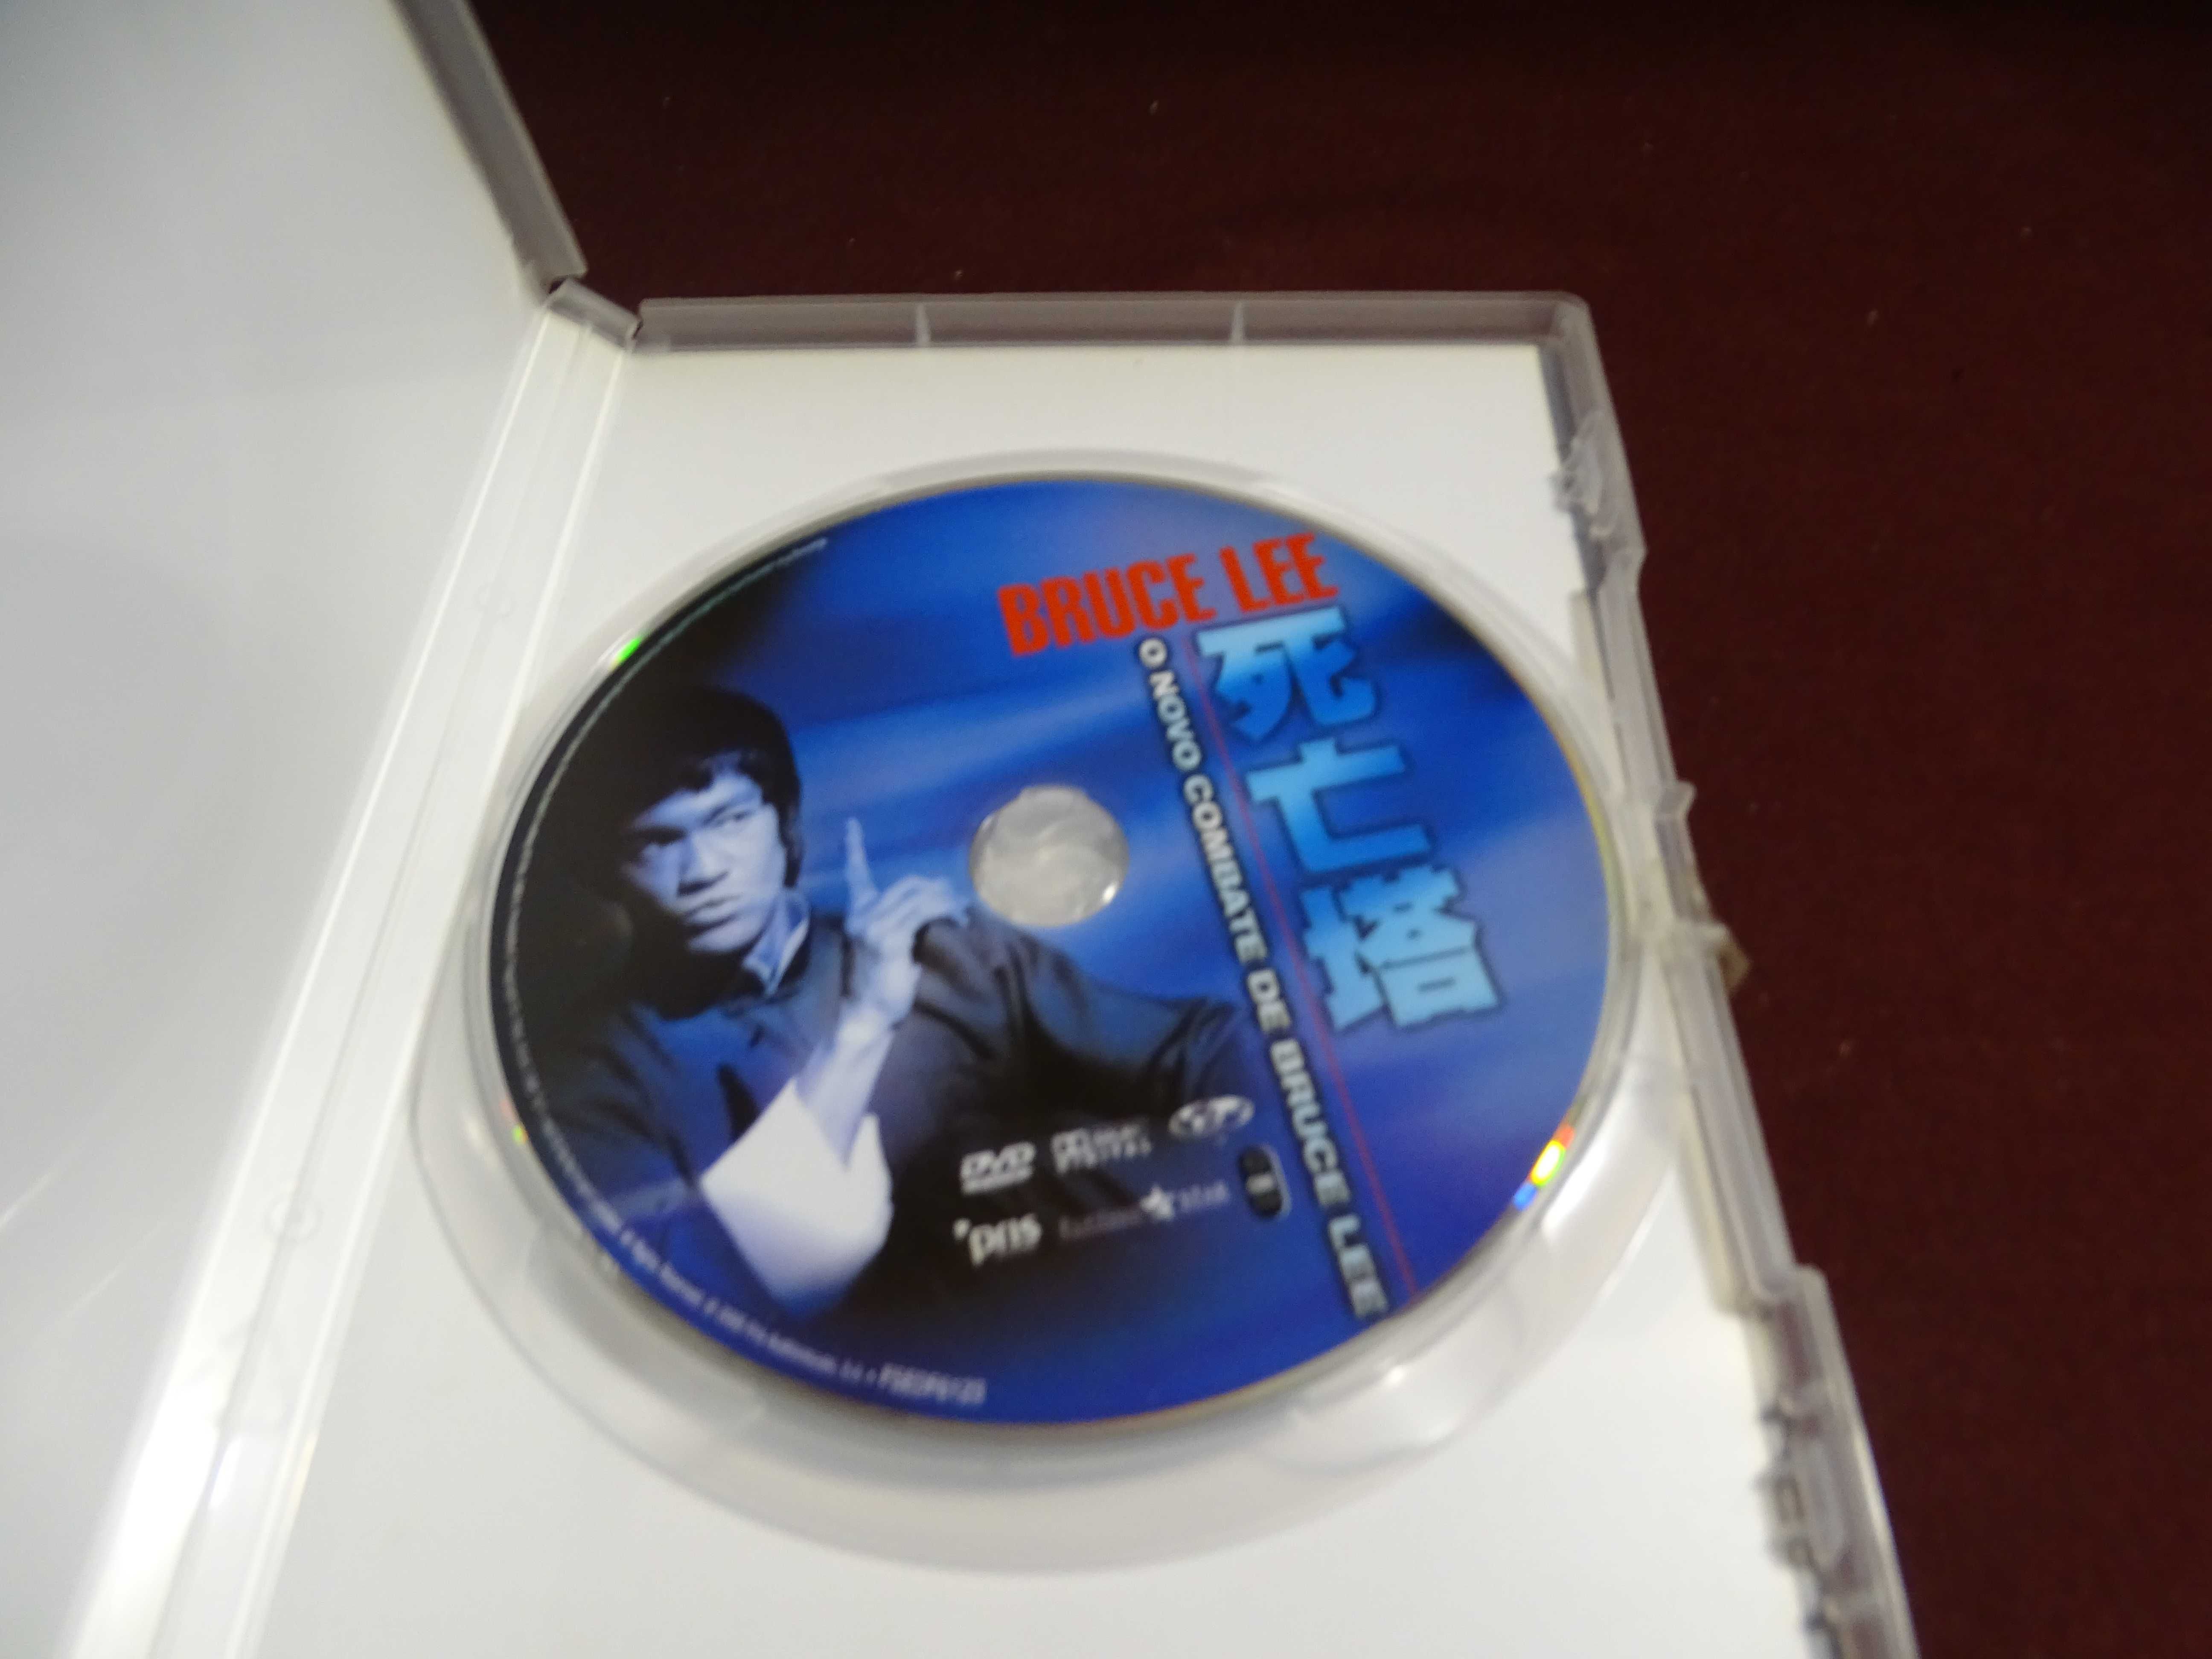 DVD-O novo combate de Bruce Lee